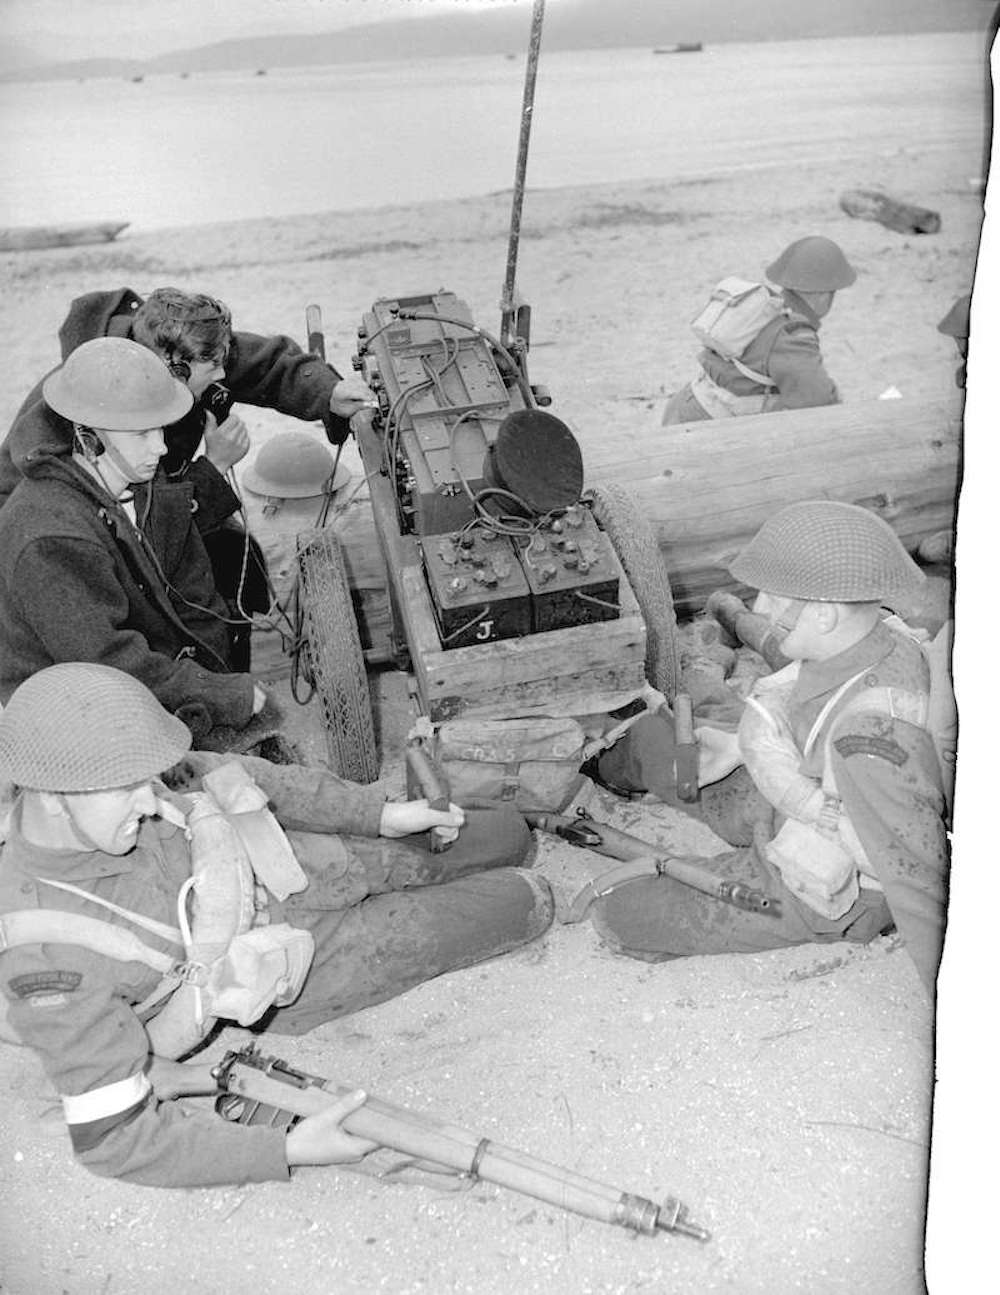 1943 - Army radio [operator and soldiers on] Kitsilano Beach